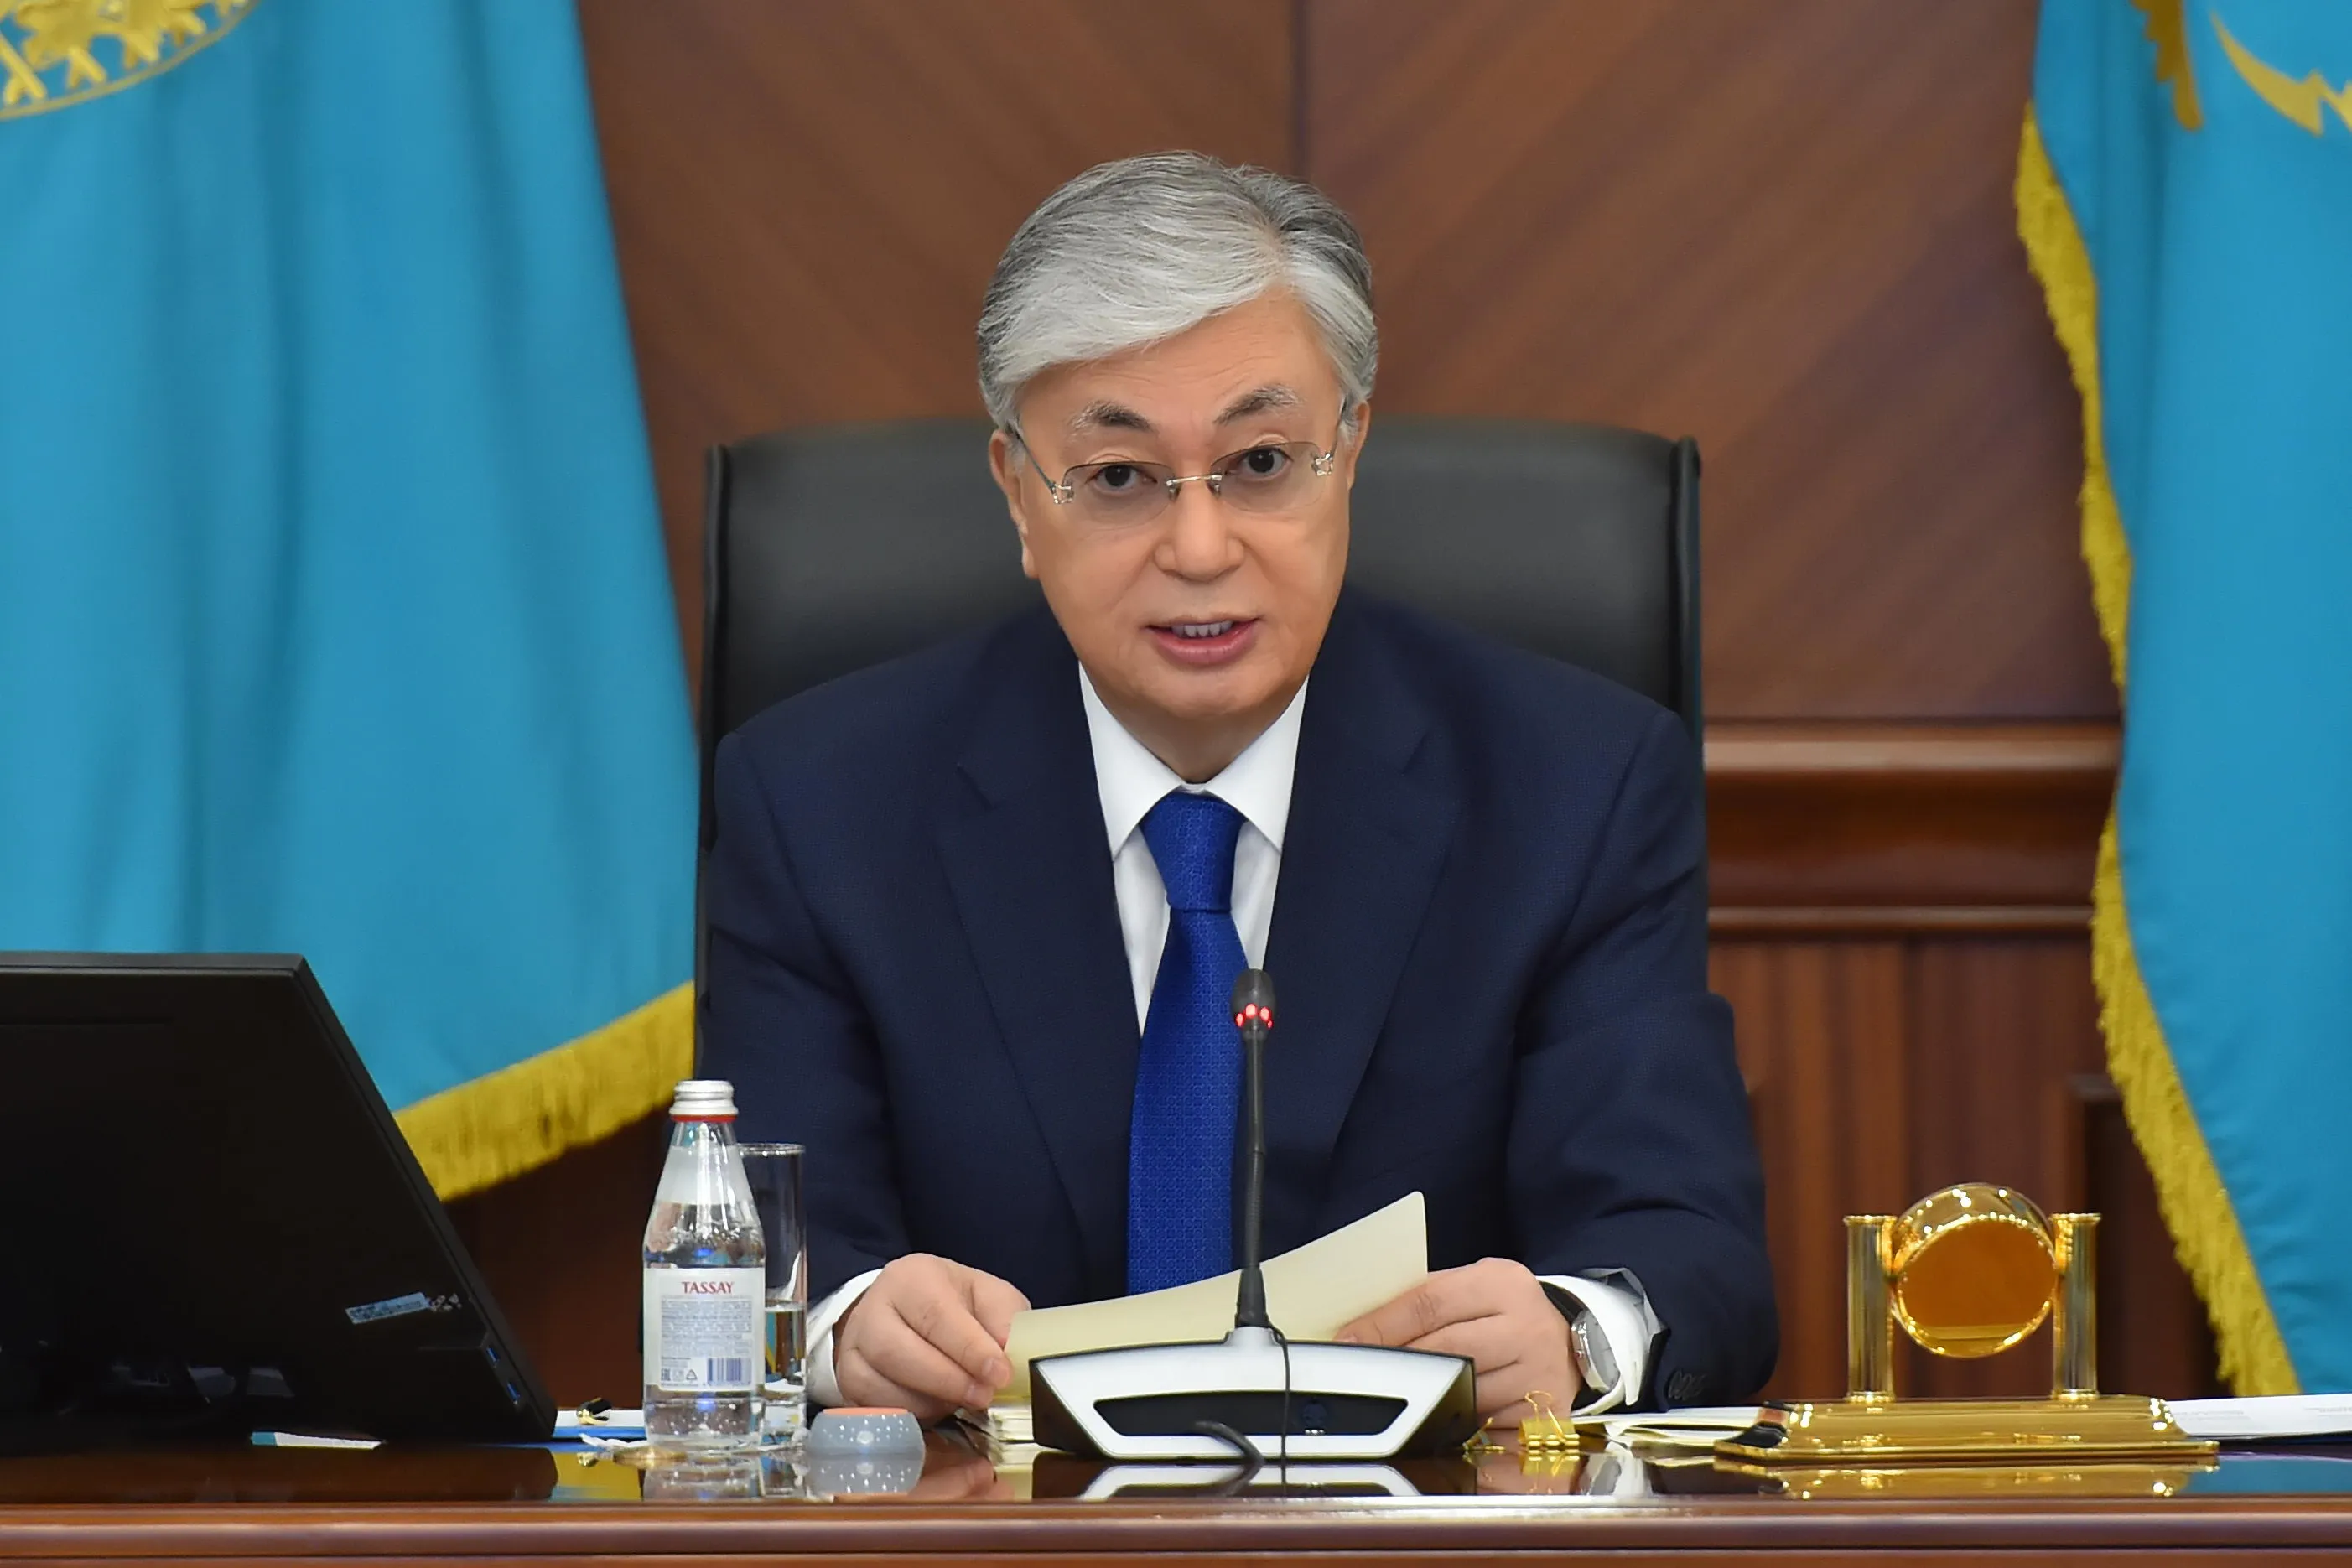 Глава государства поздравил казахстанцев с праздником Пасхи